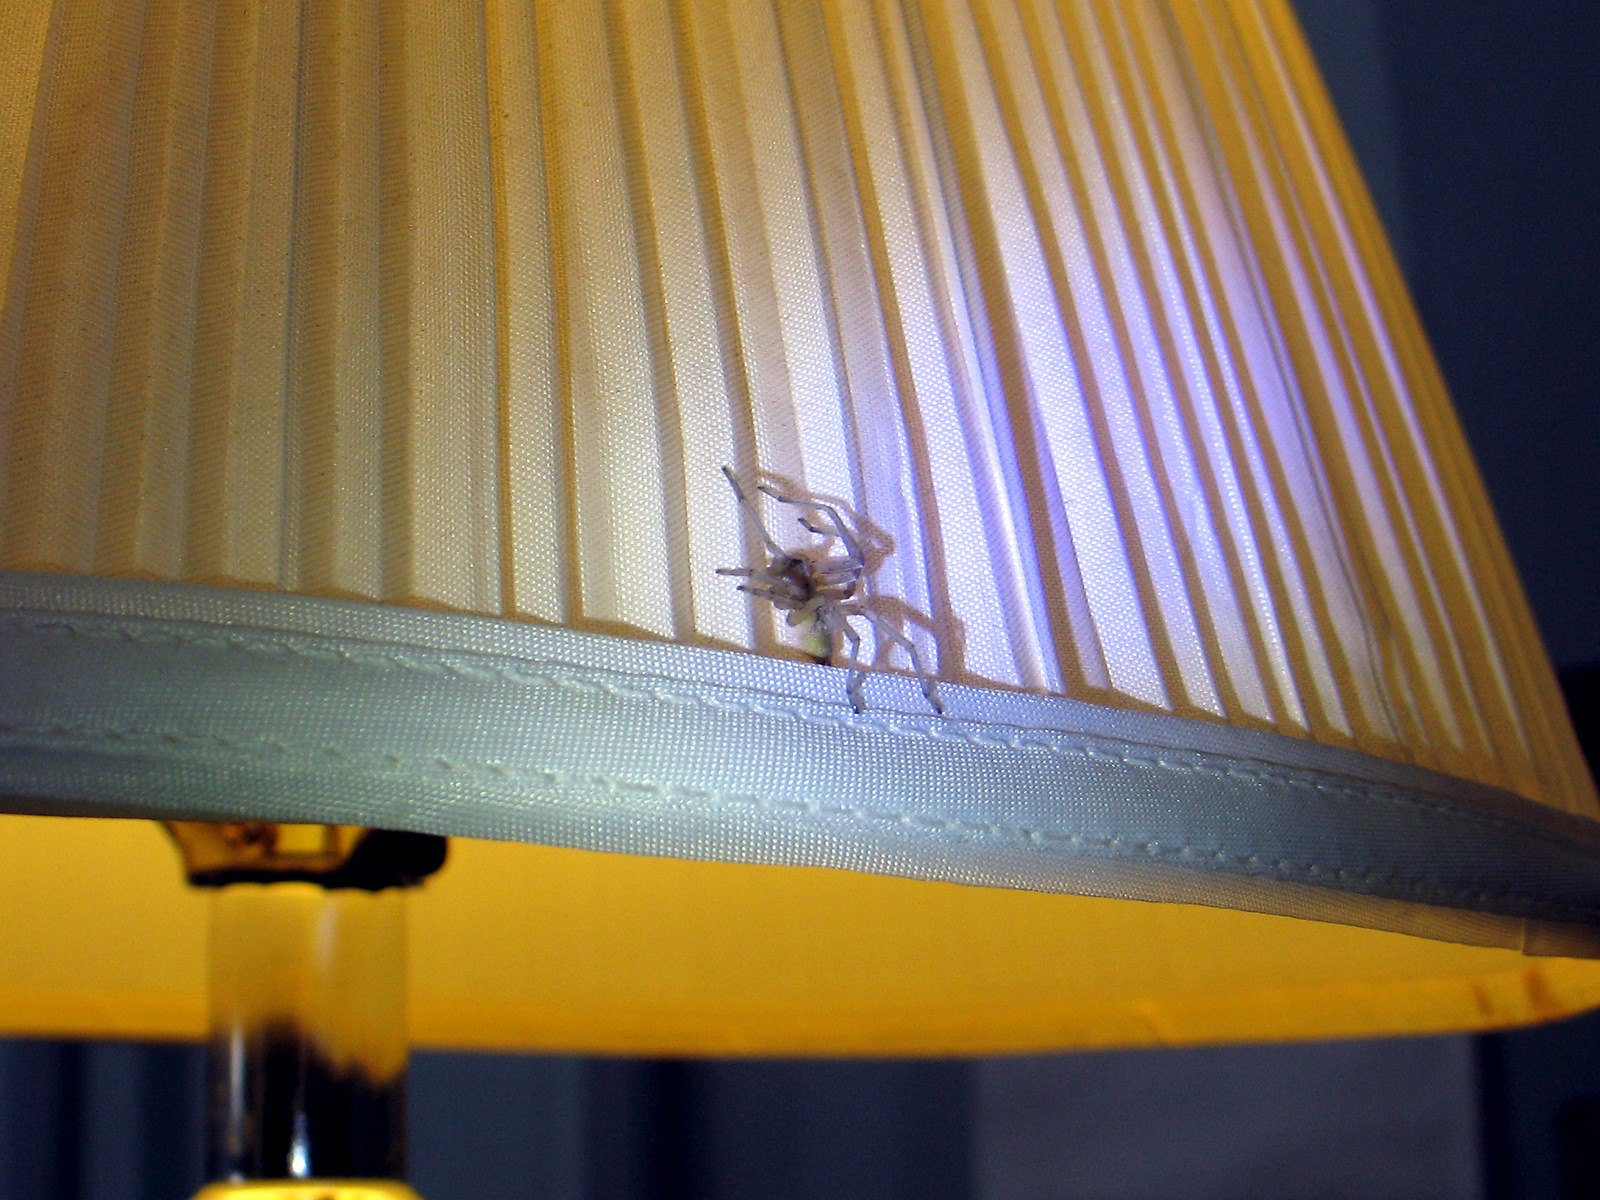 Yellow sac spider crawls on lamp